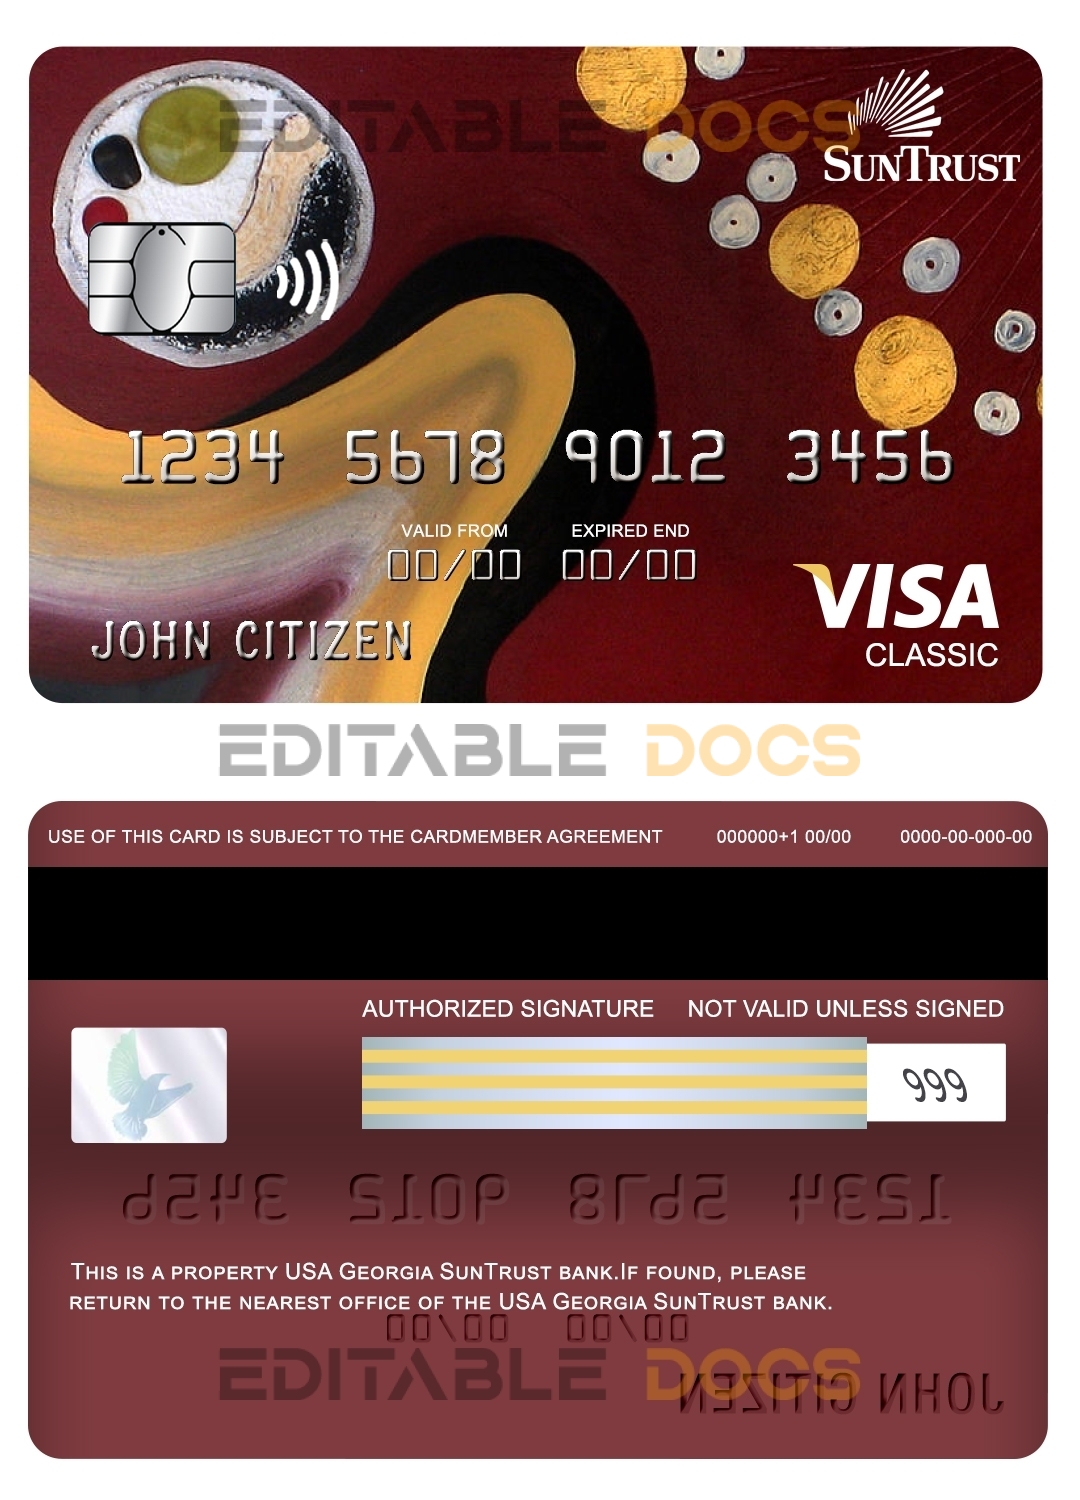 Editable USA Georgia SunTrust bank visa classic card Templates in PSD Format